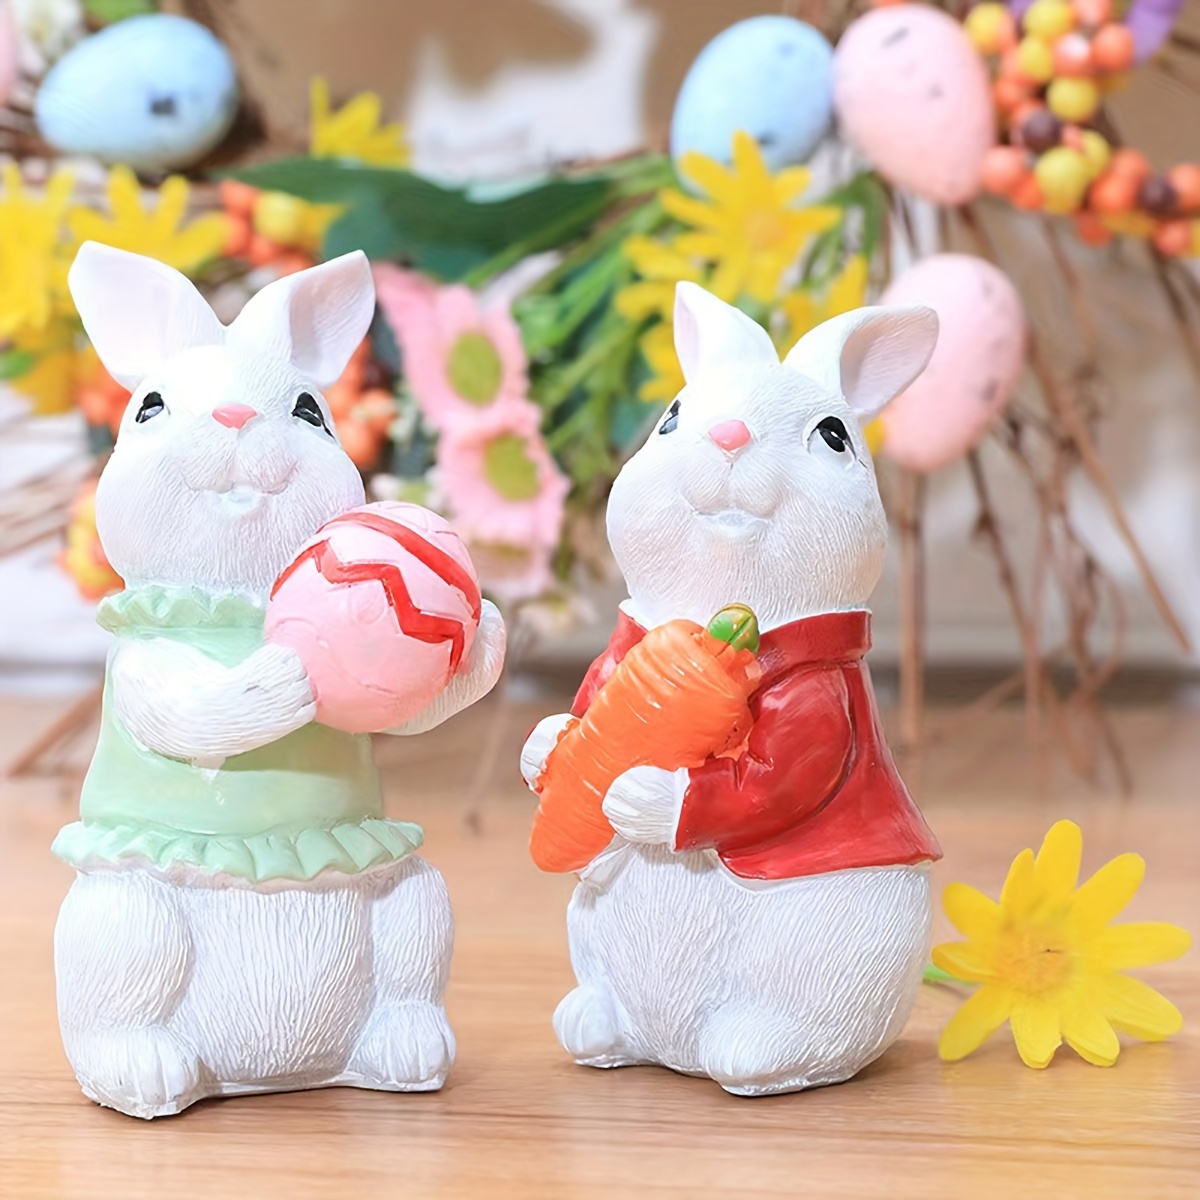  Bunny Figurines